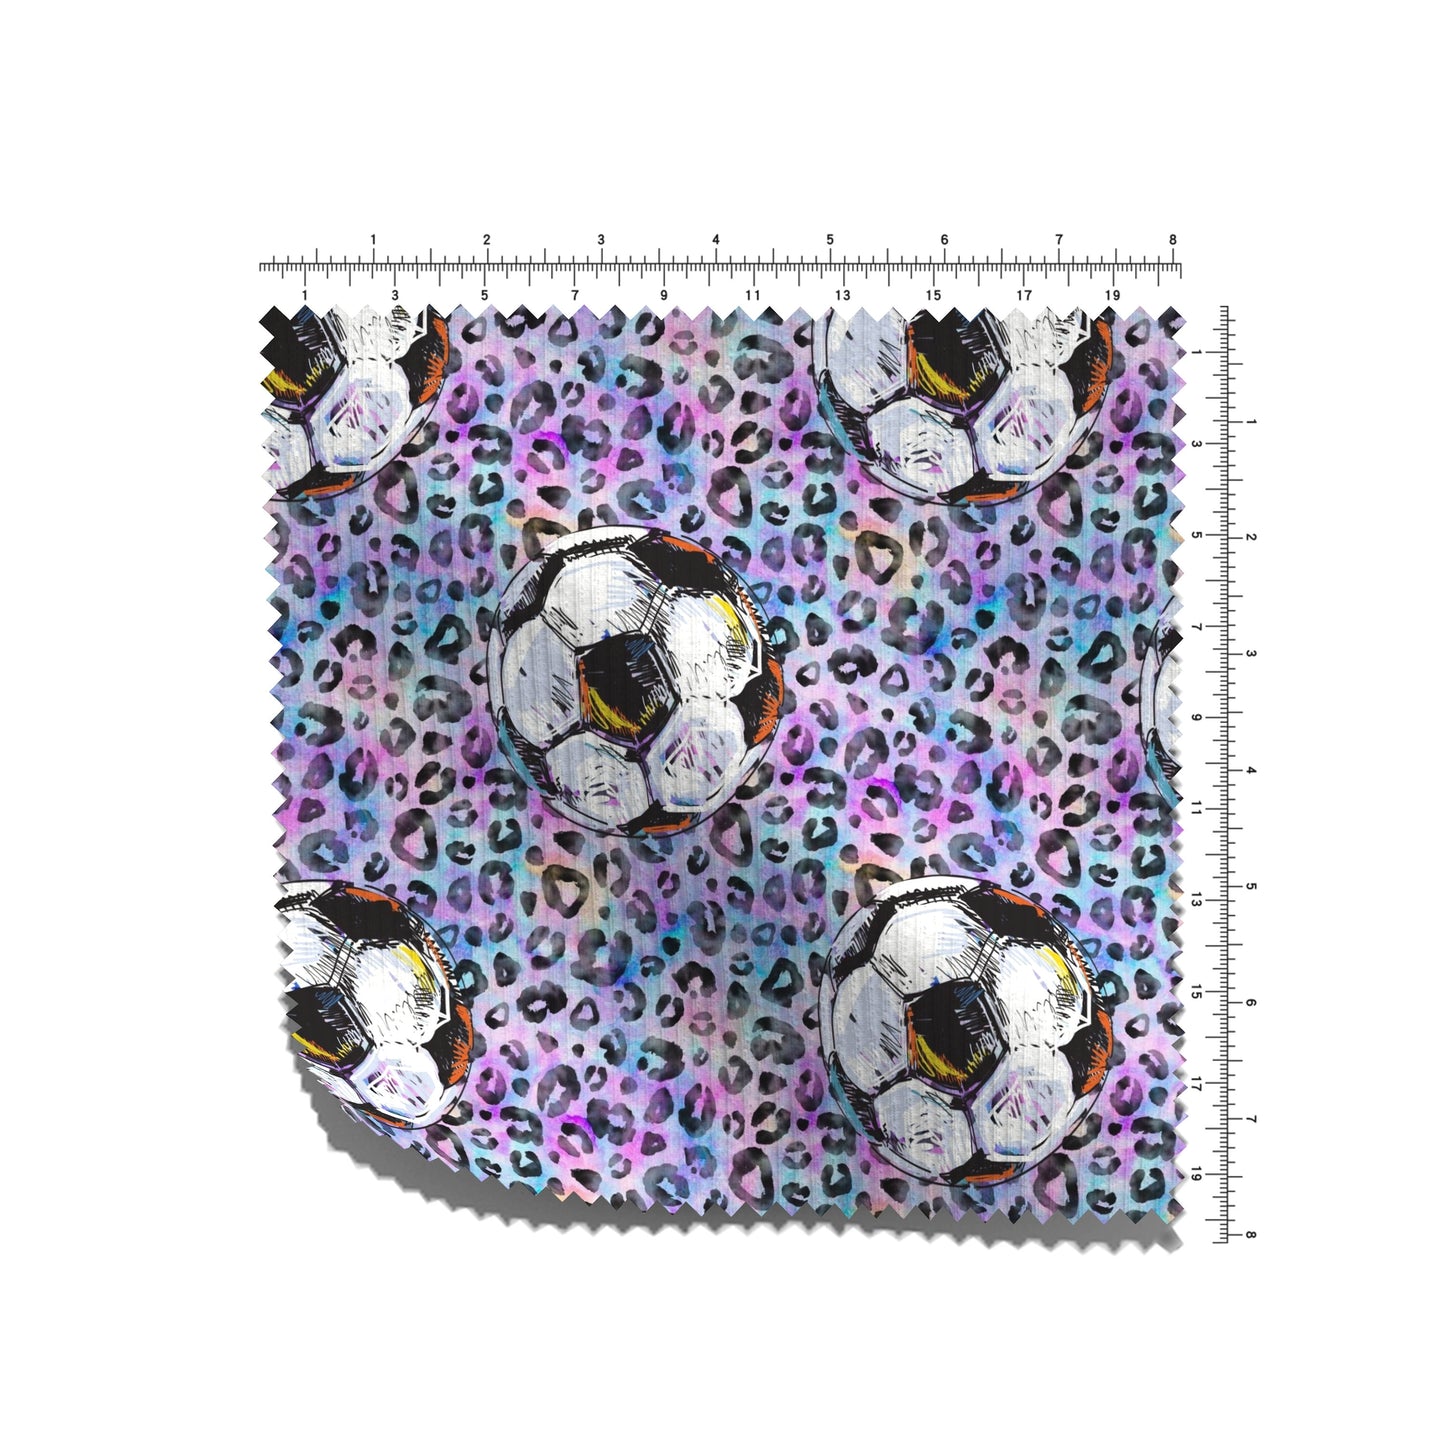 Rib Knit Fabric by the Yard RBK2645 Soccer